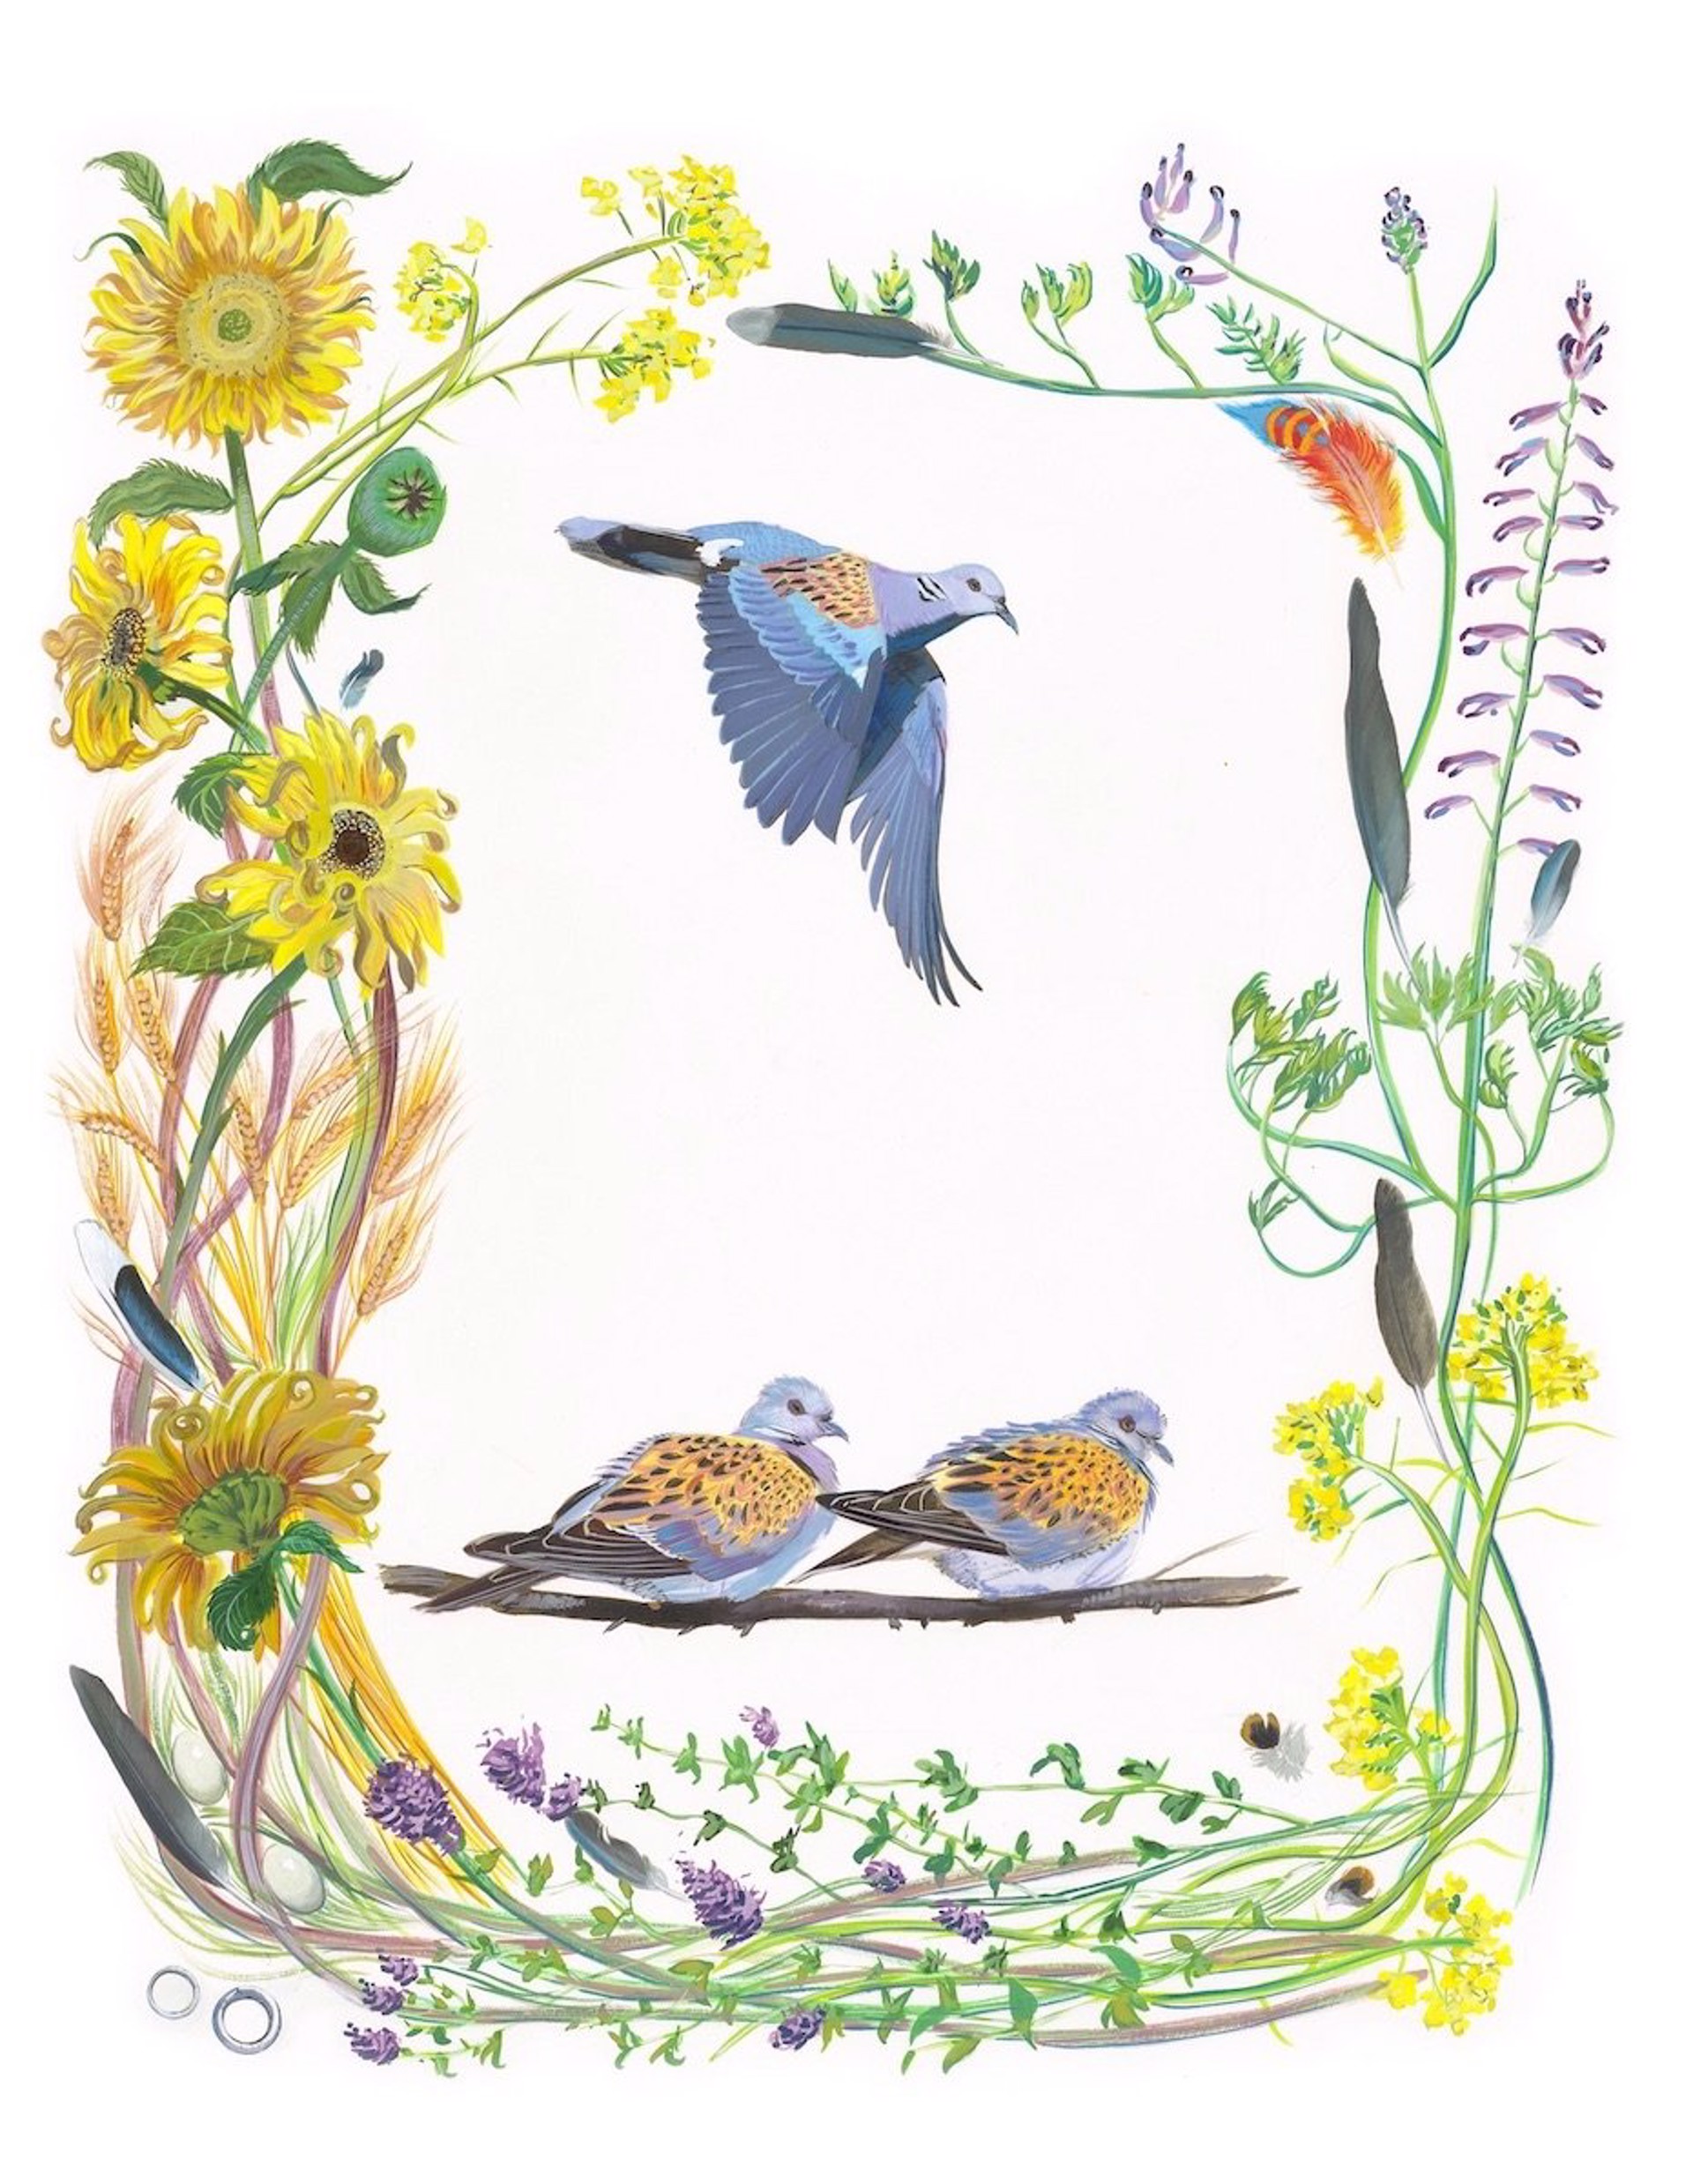 Birds of Shakespeare: Turtle Dove (Streptopelia turtur) by Missy Dunaway